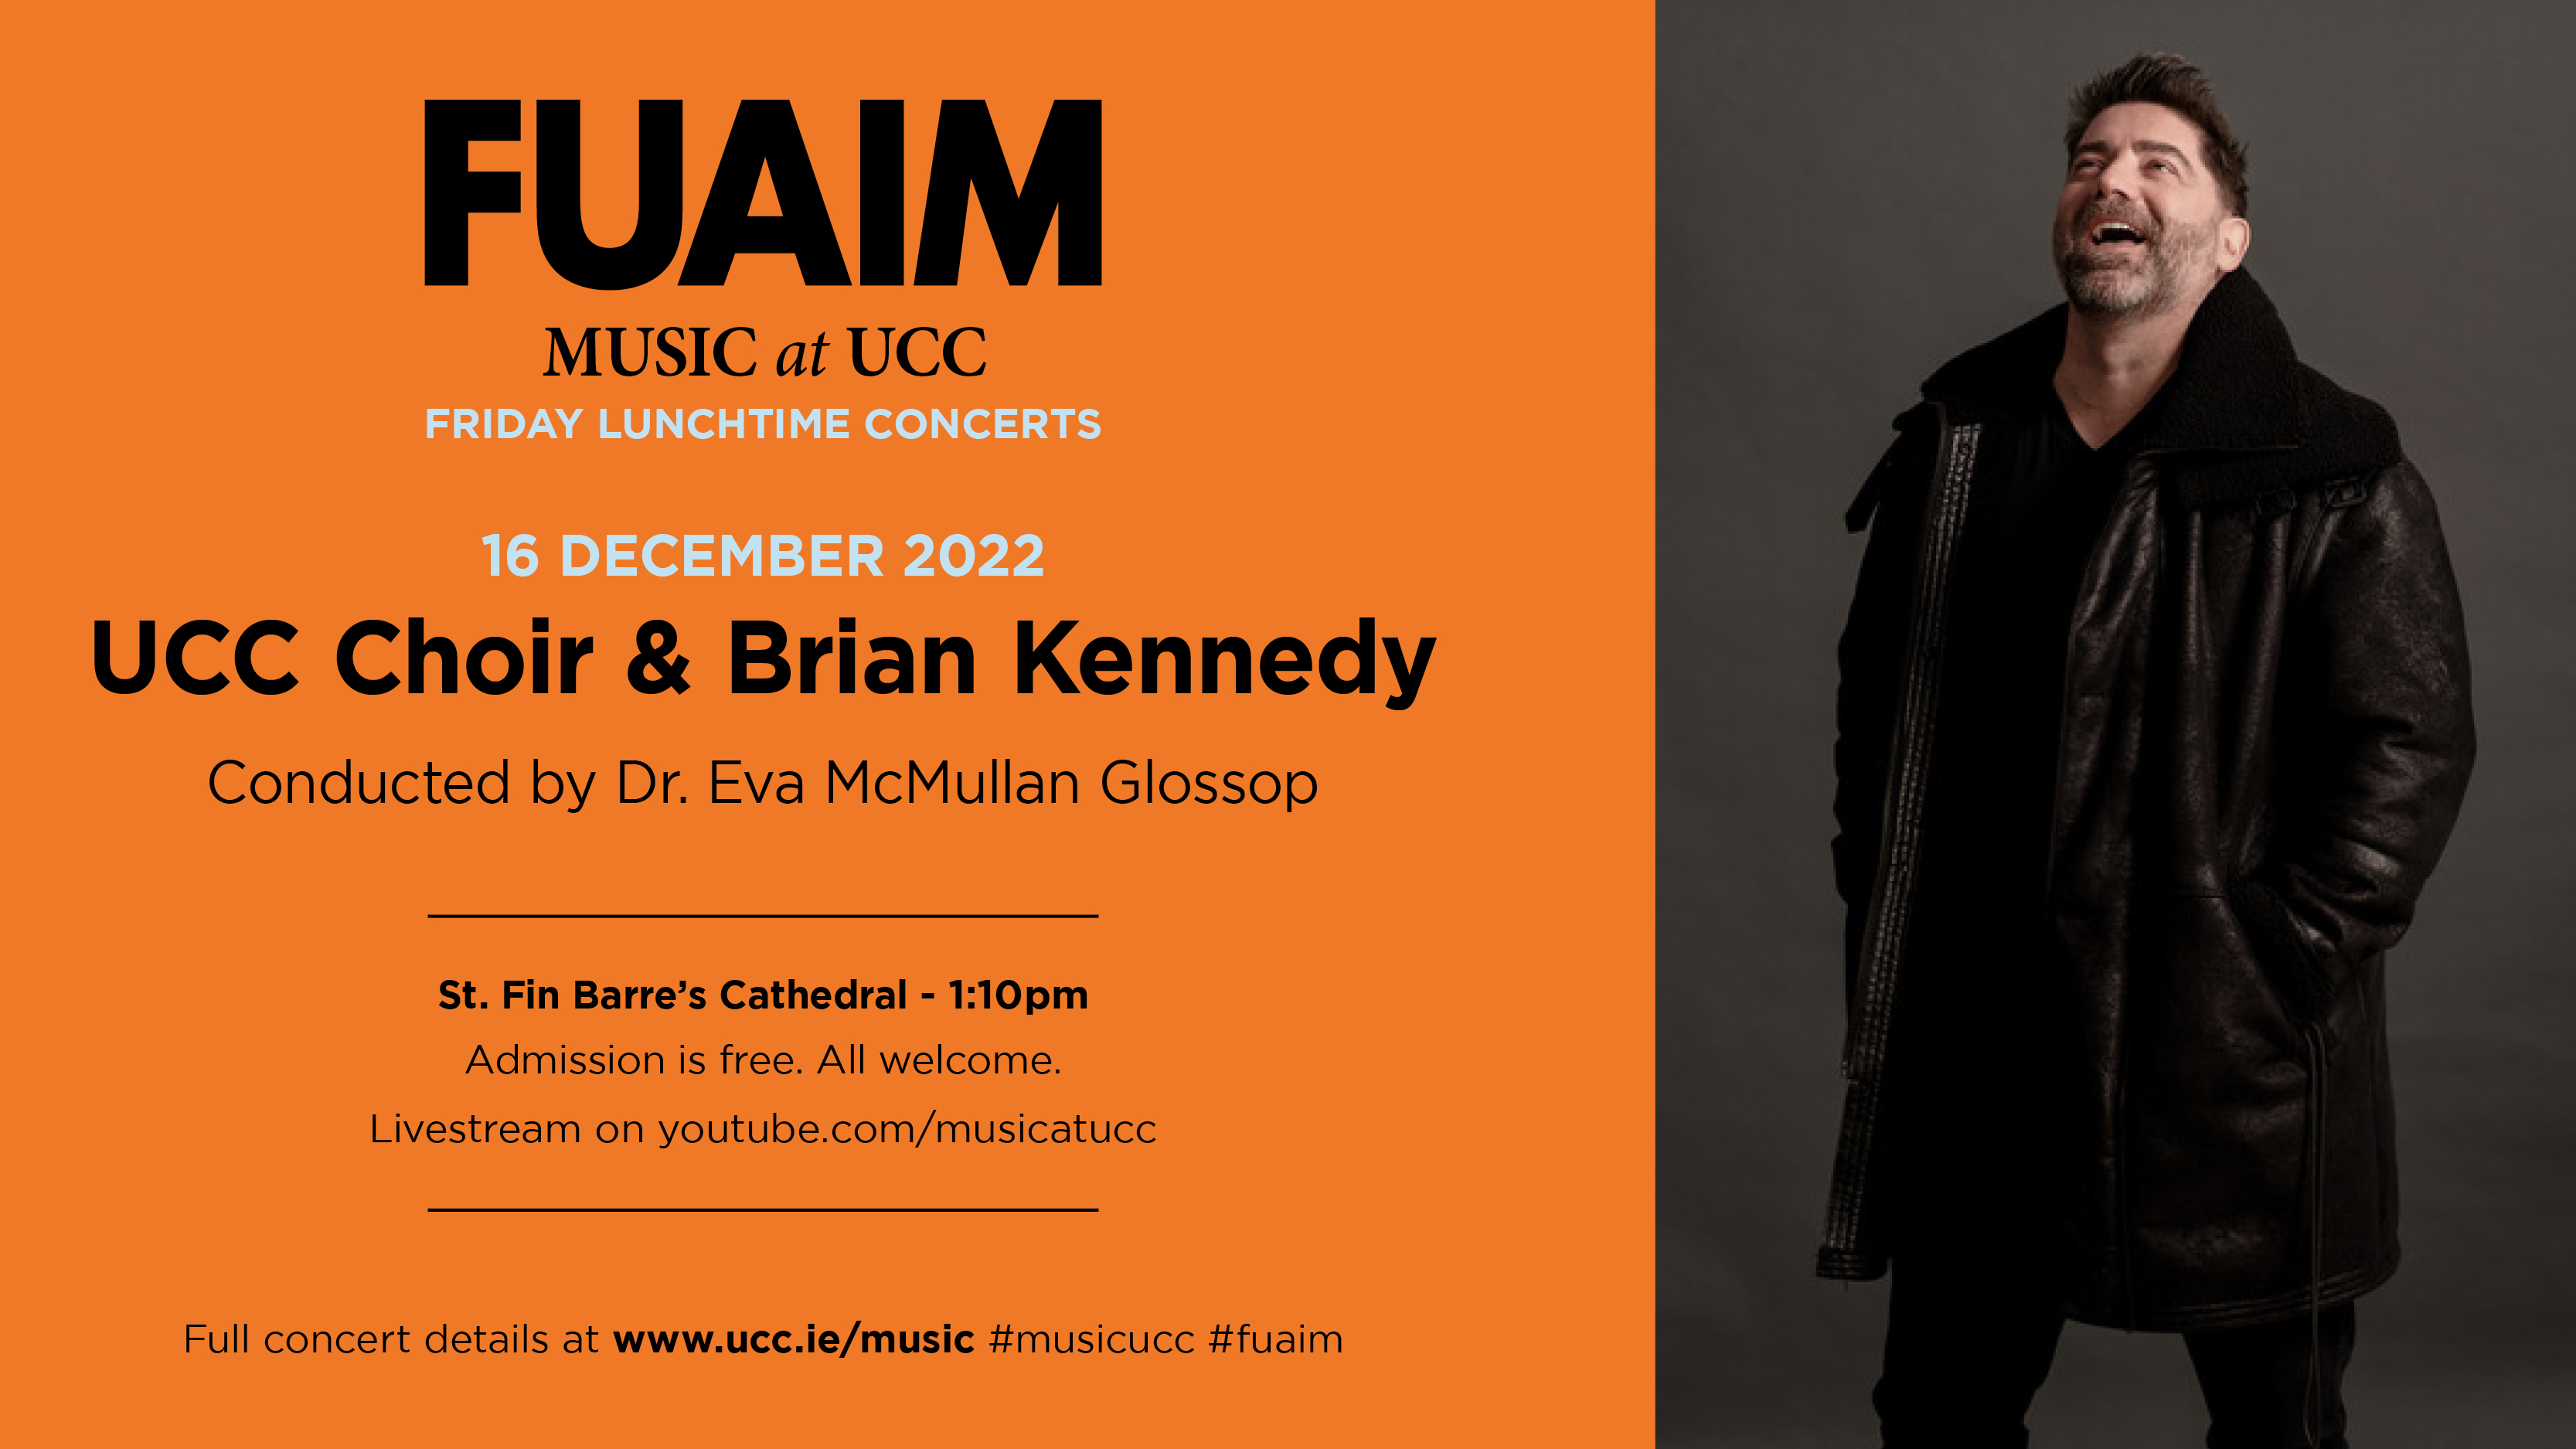 FUAIM Concert: UCC Choir & Brian Kennedy, 16th December, 1.10pm, St. Fin Barre's Cathedral